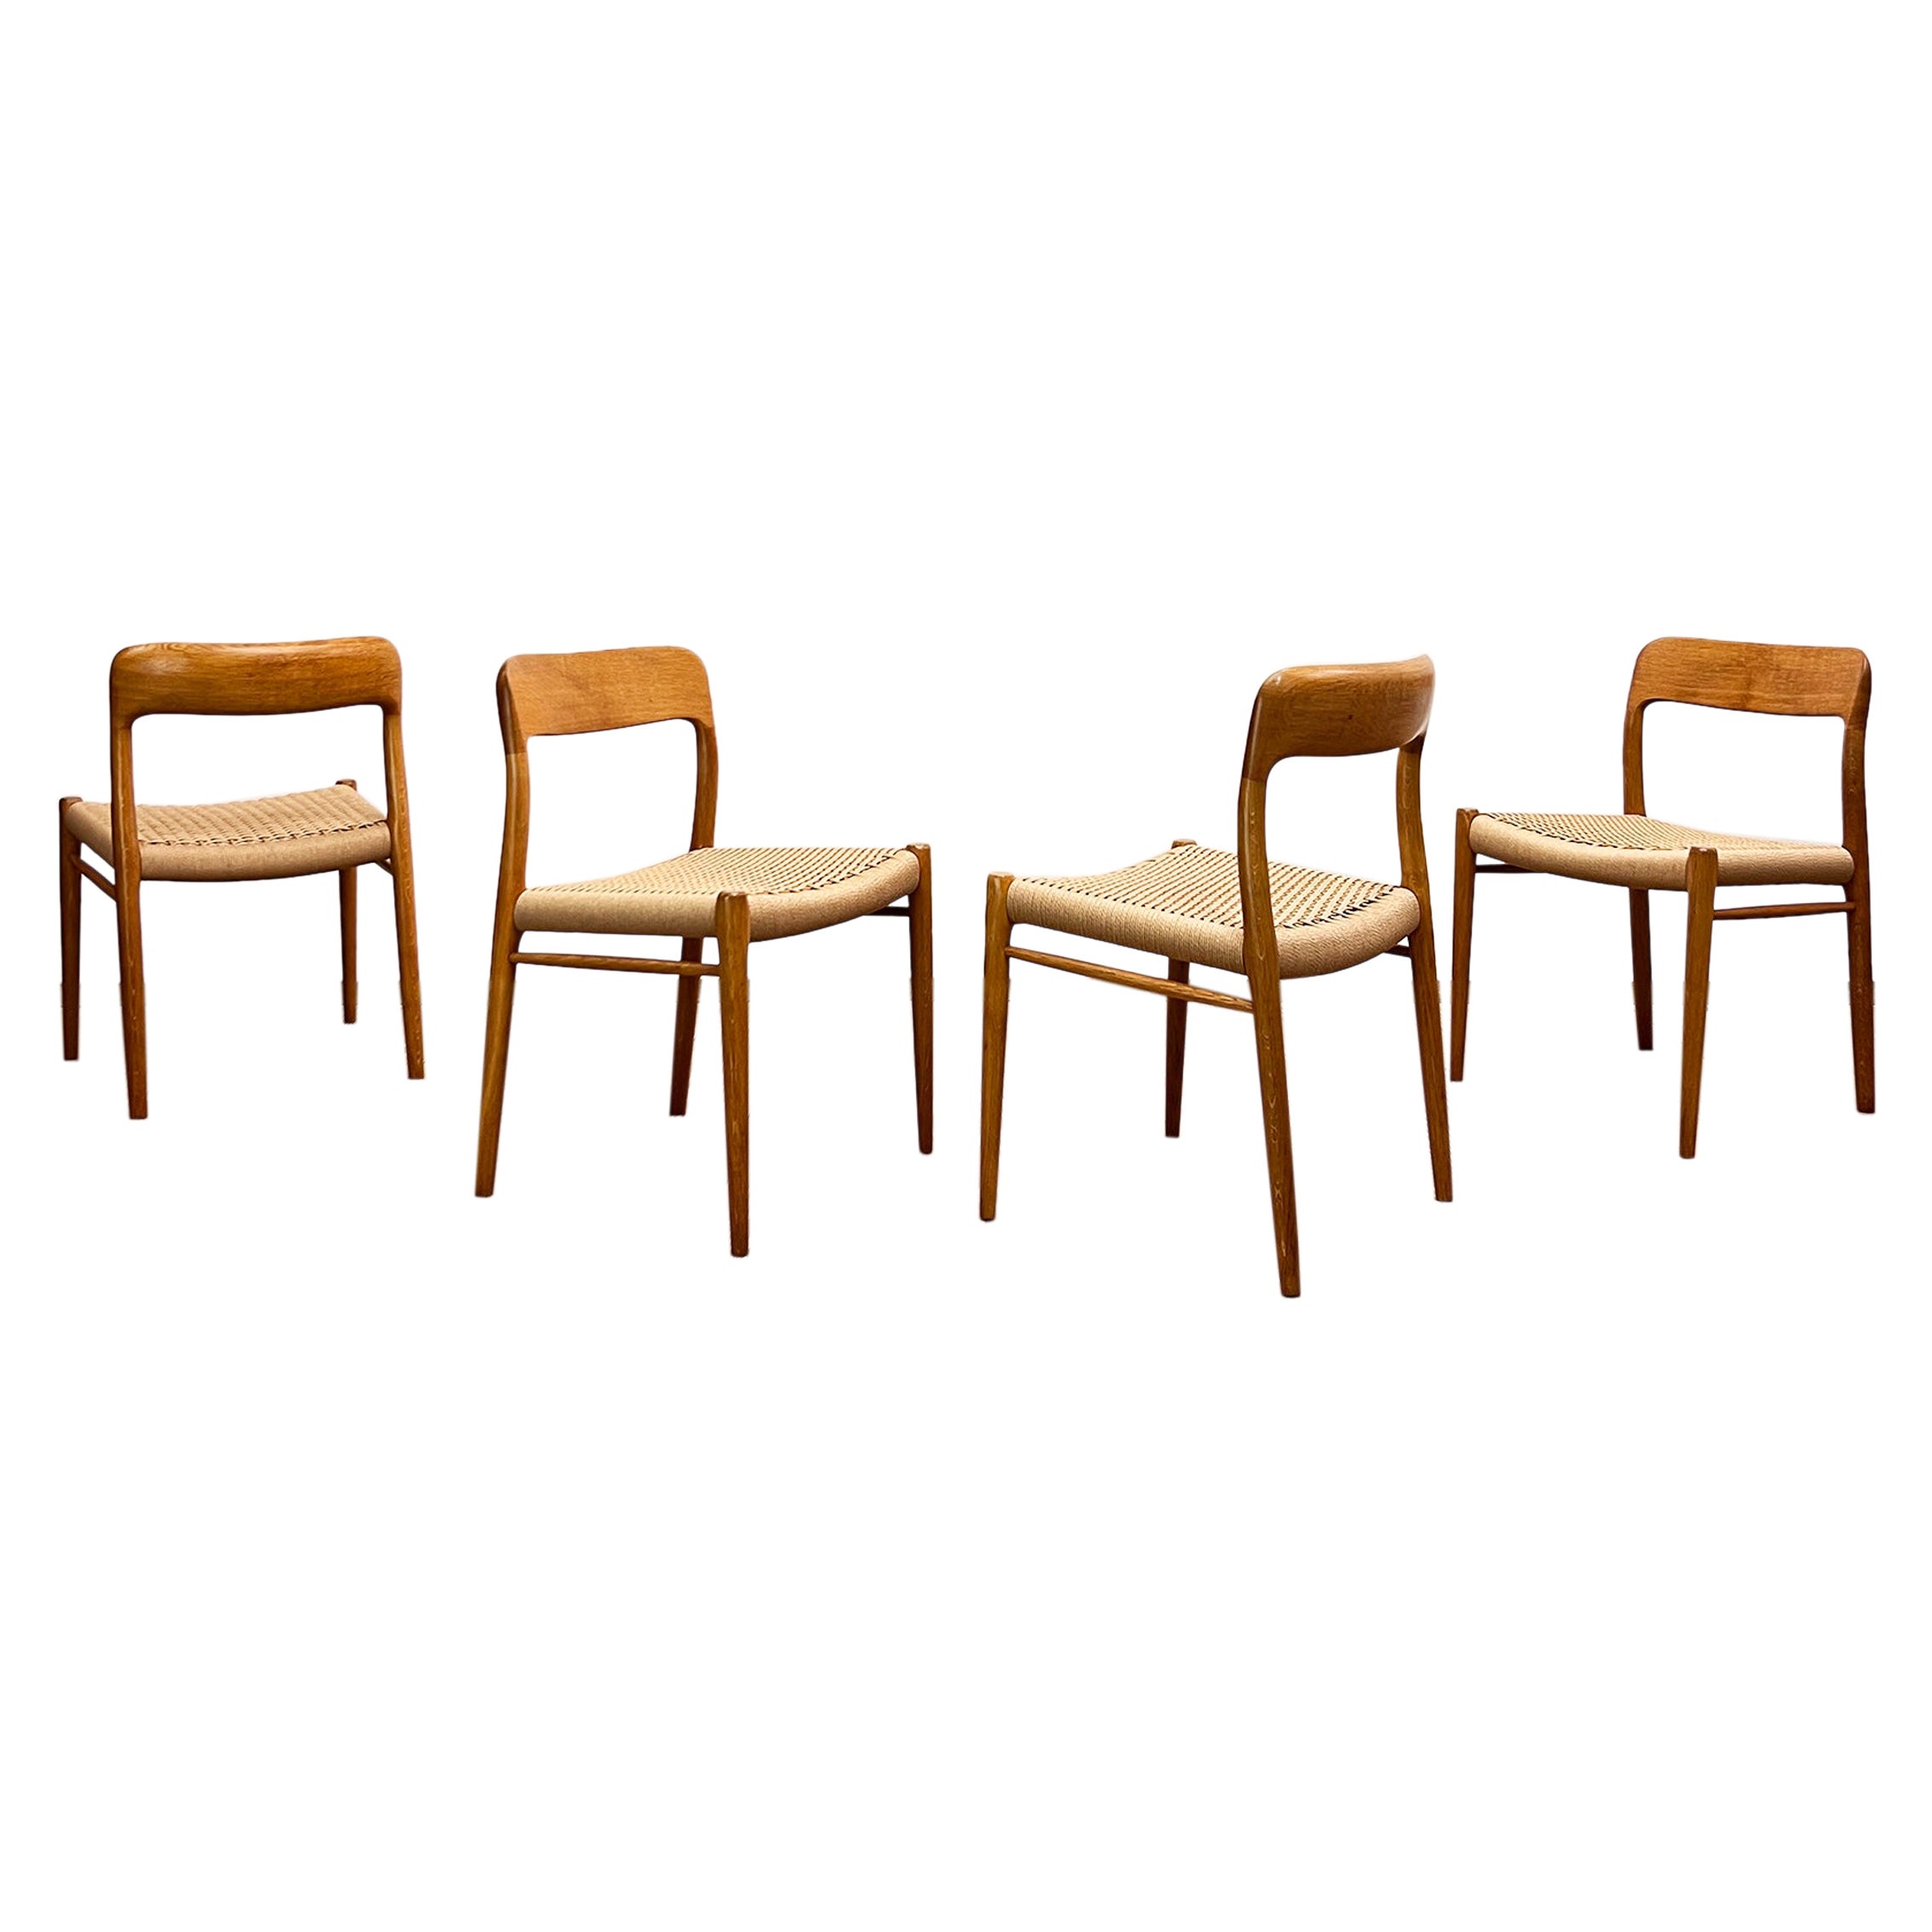 4 Danish Mid-Century Modern Oak Dining Chairs #75, Niels O. Møller, J. L. Moller